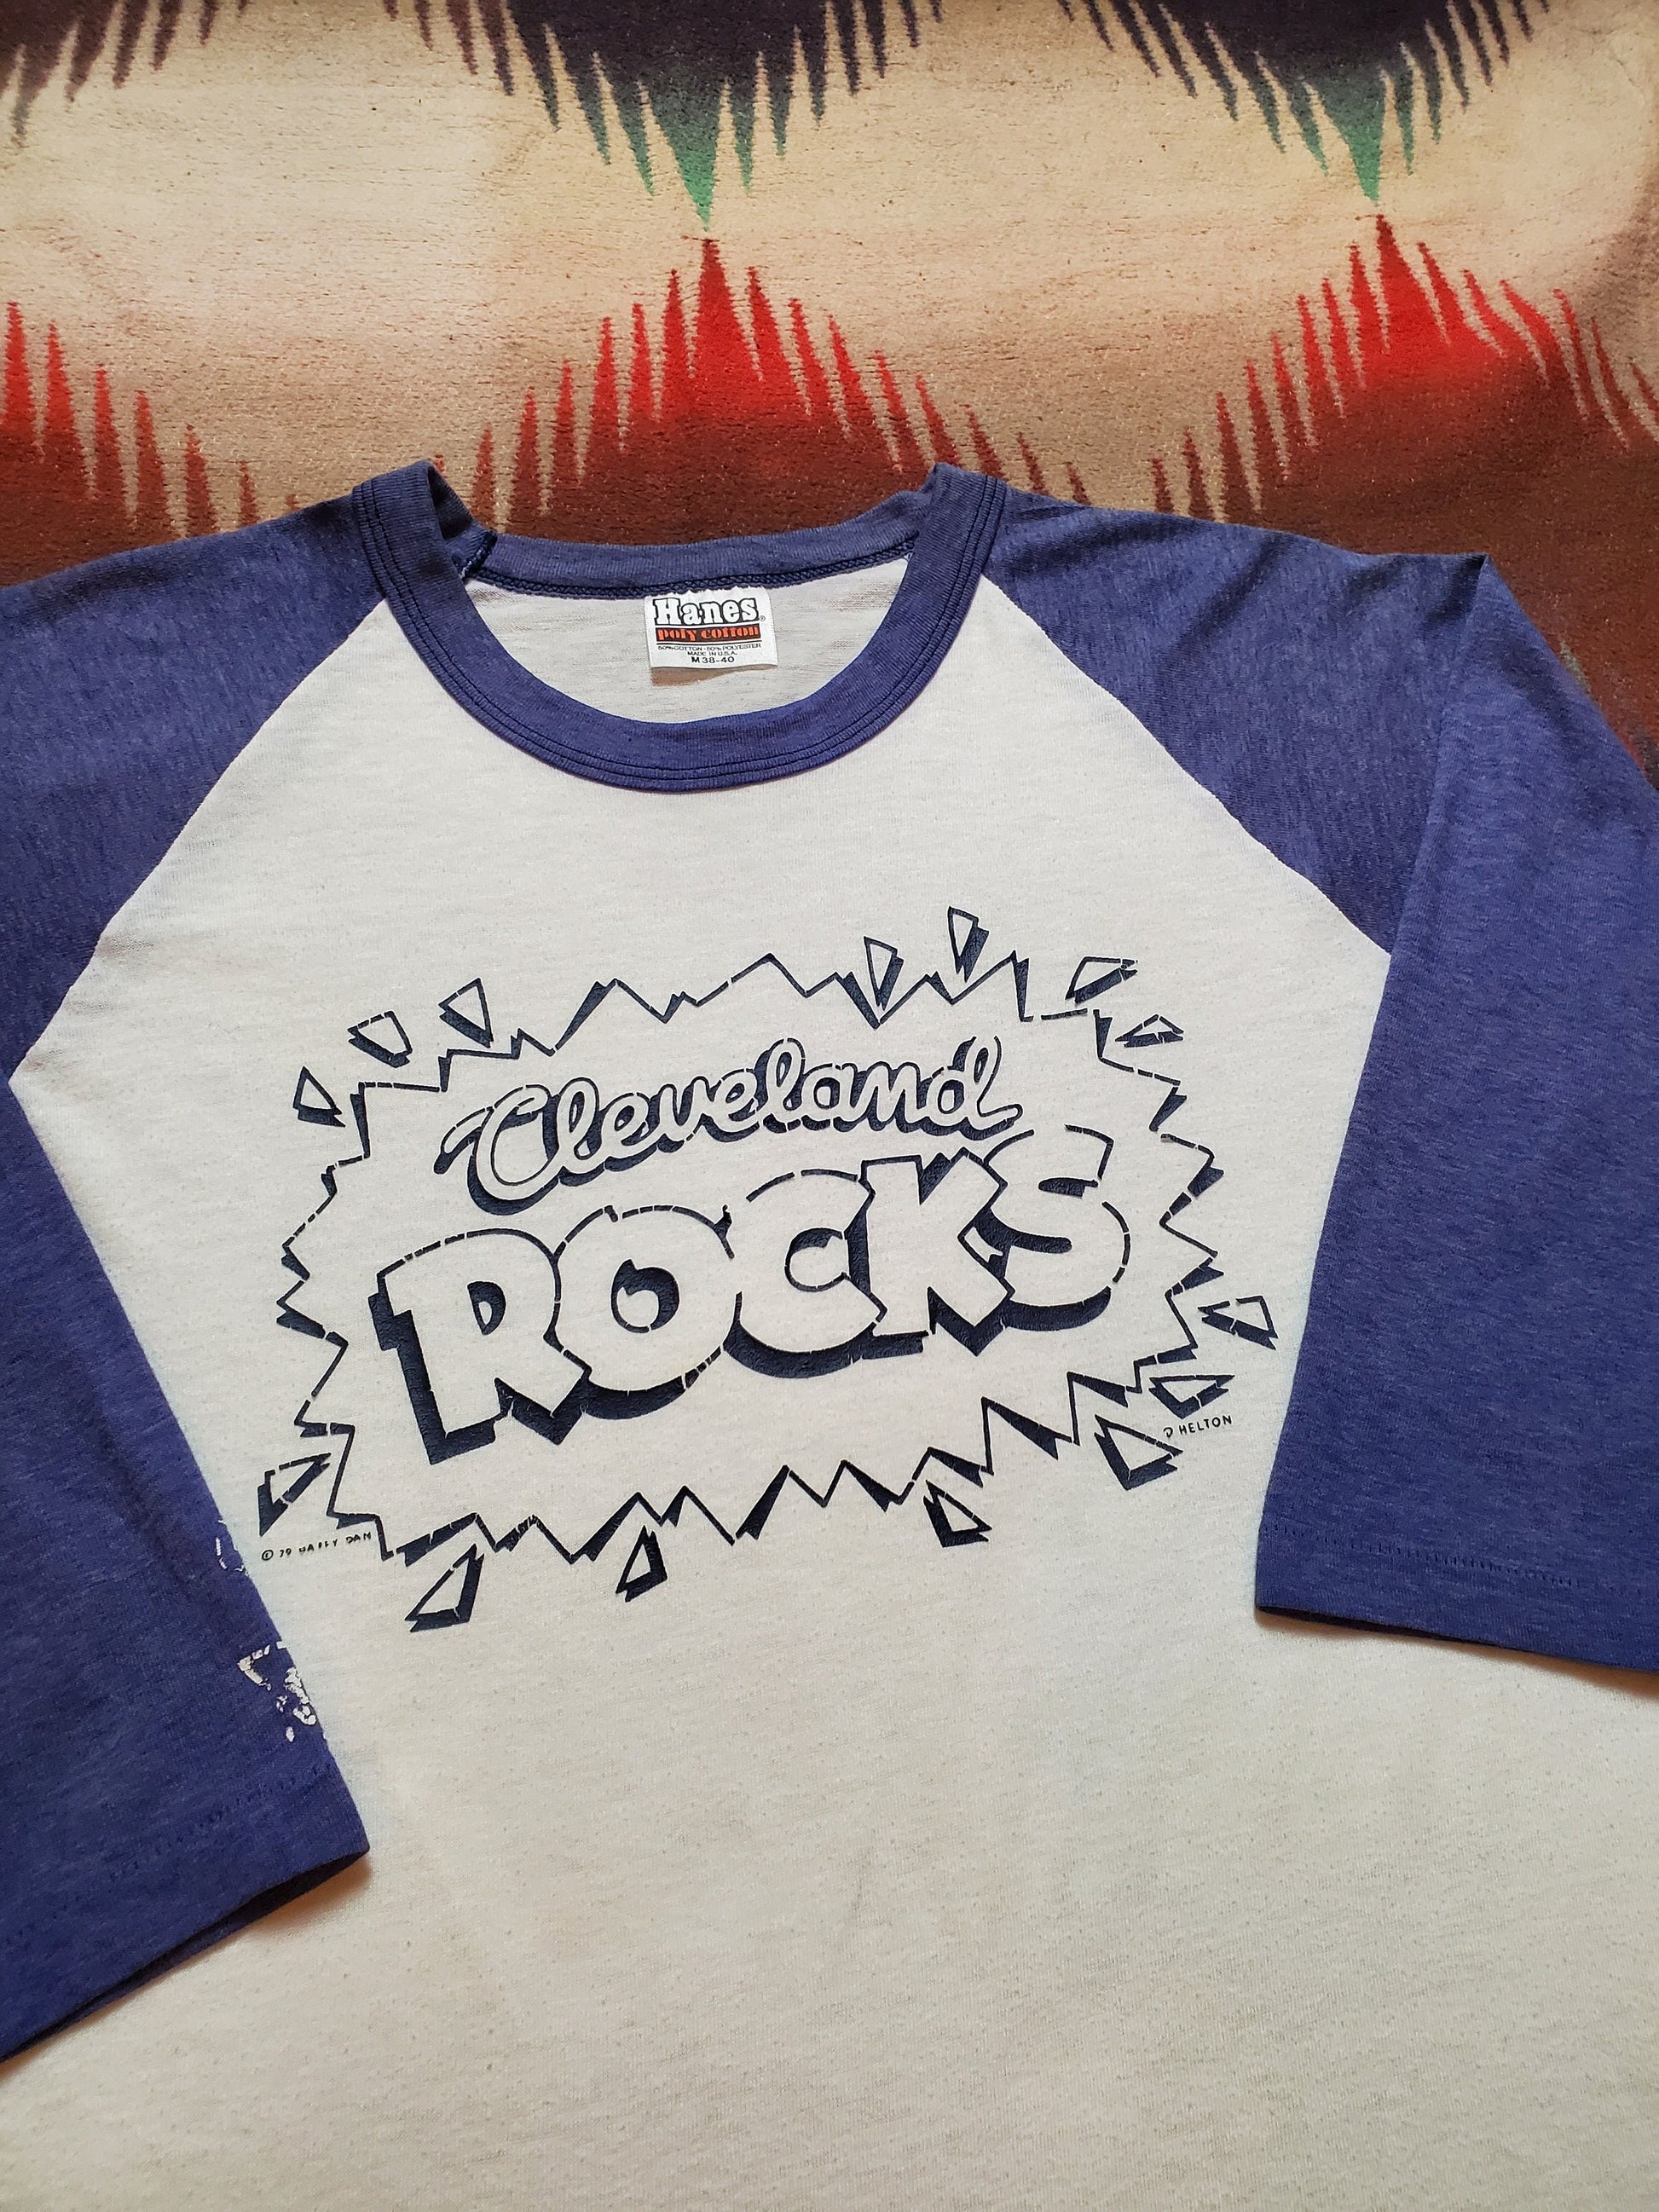 1970s Cleveland Rocks WMMS 101 Radio Station Daffy Dan's T-Shirts Raglan T-Shirt Hanes Made in USA Size S/M